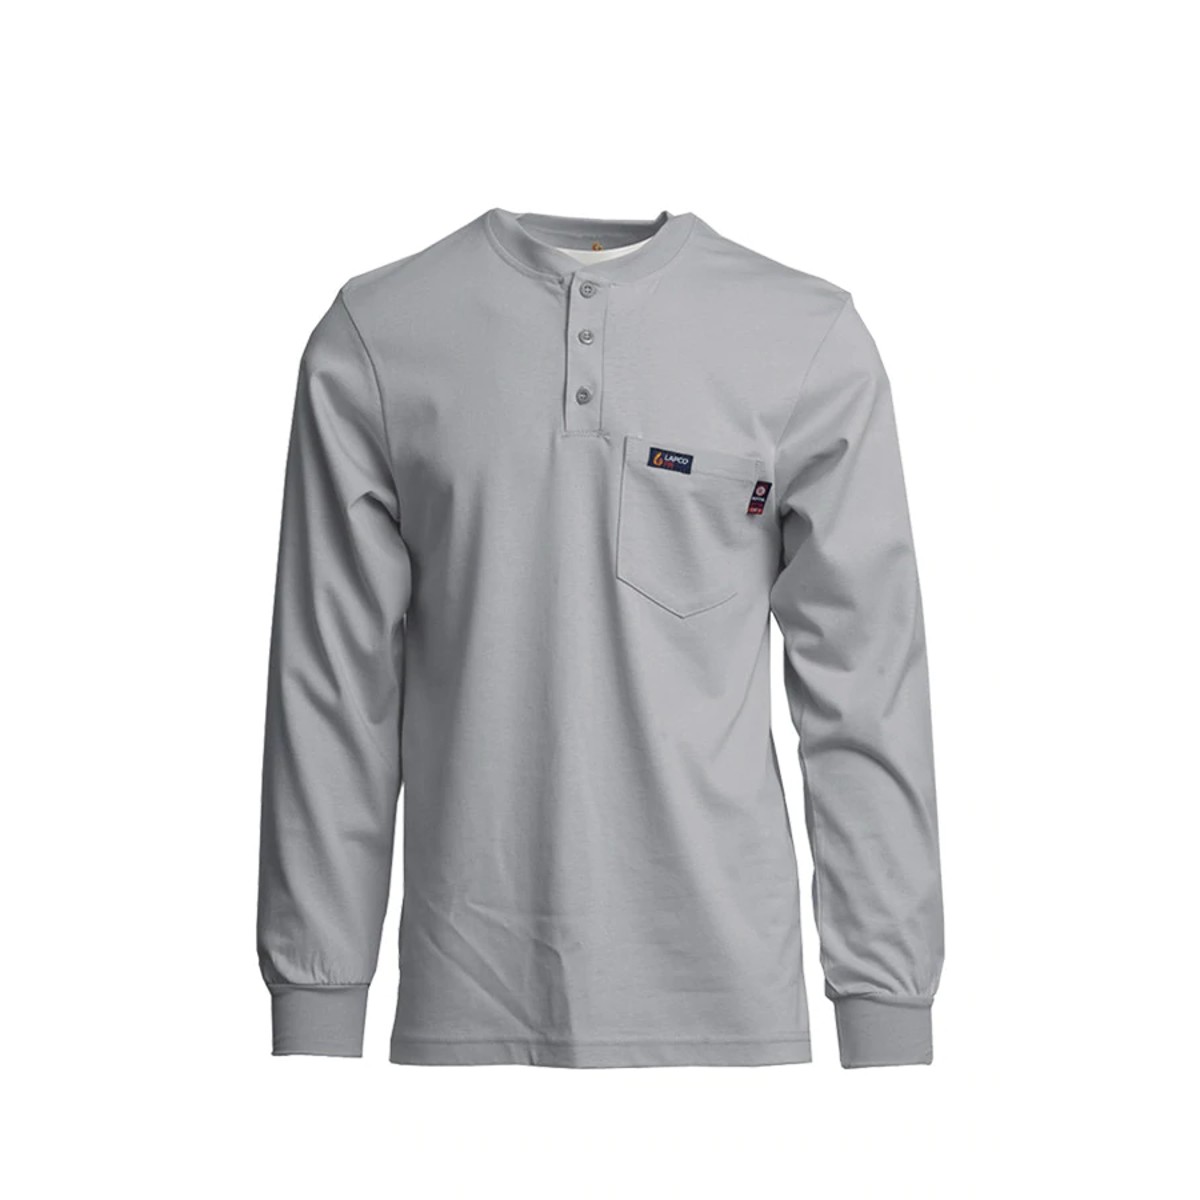 LAPCO 7 oz FR Henley Long Sleeve Shirt in Gray